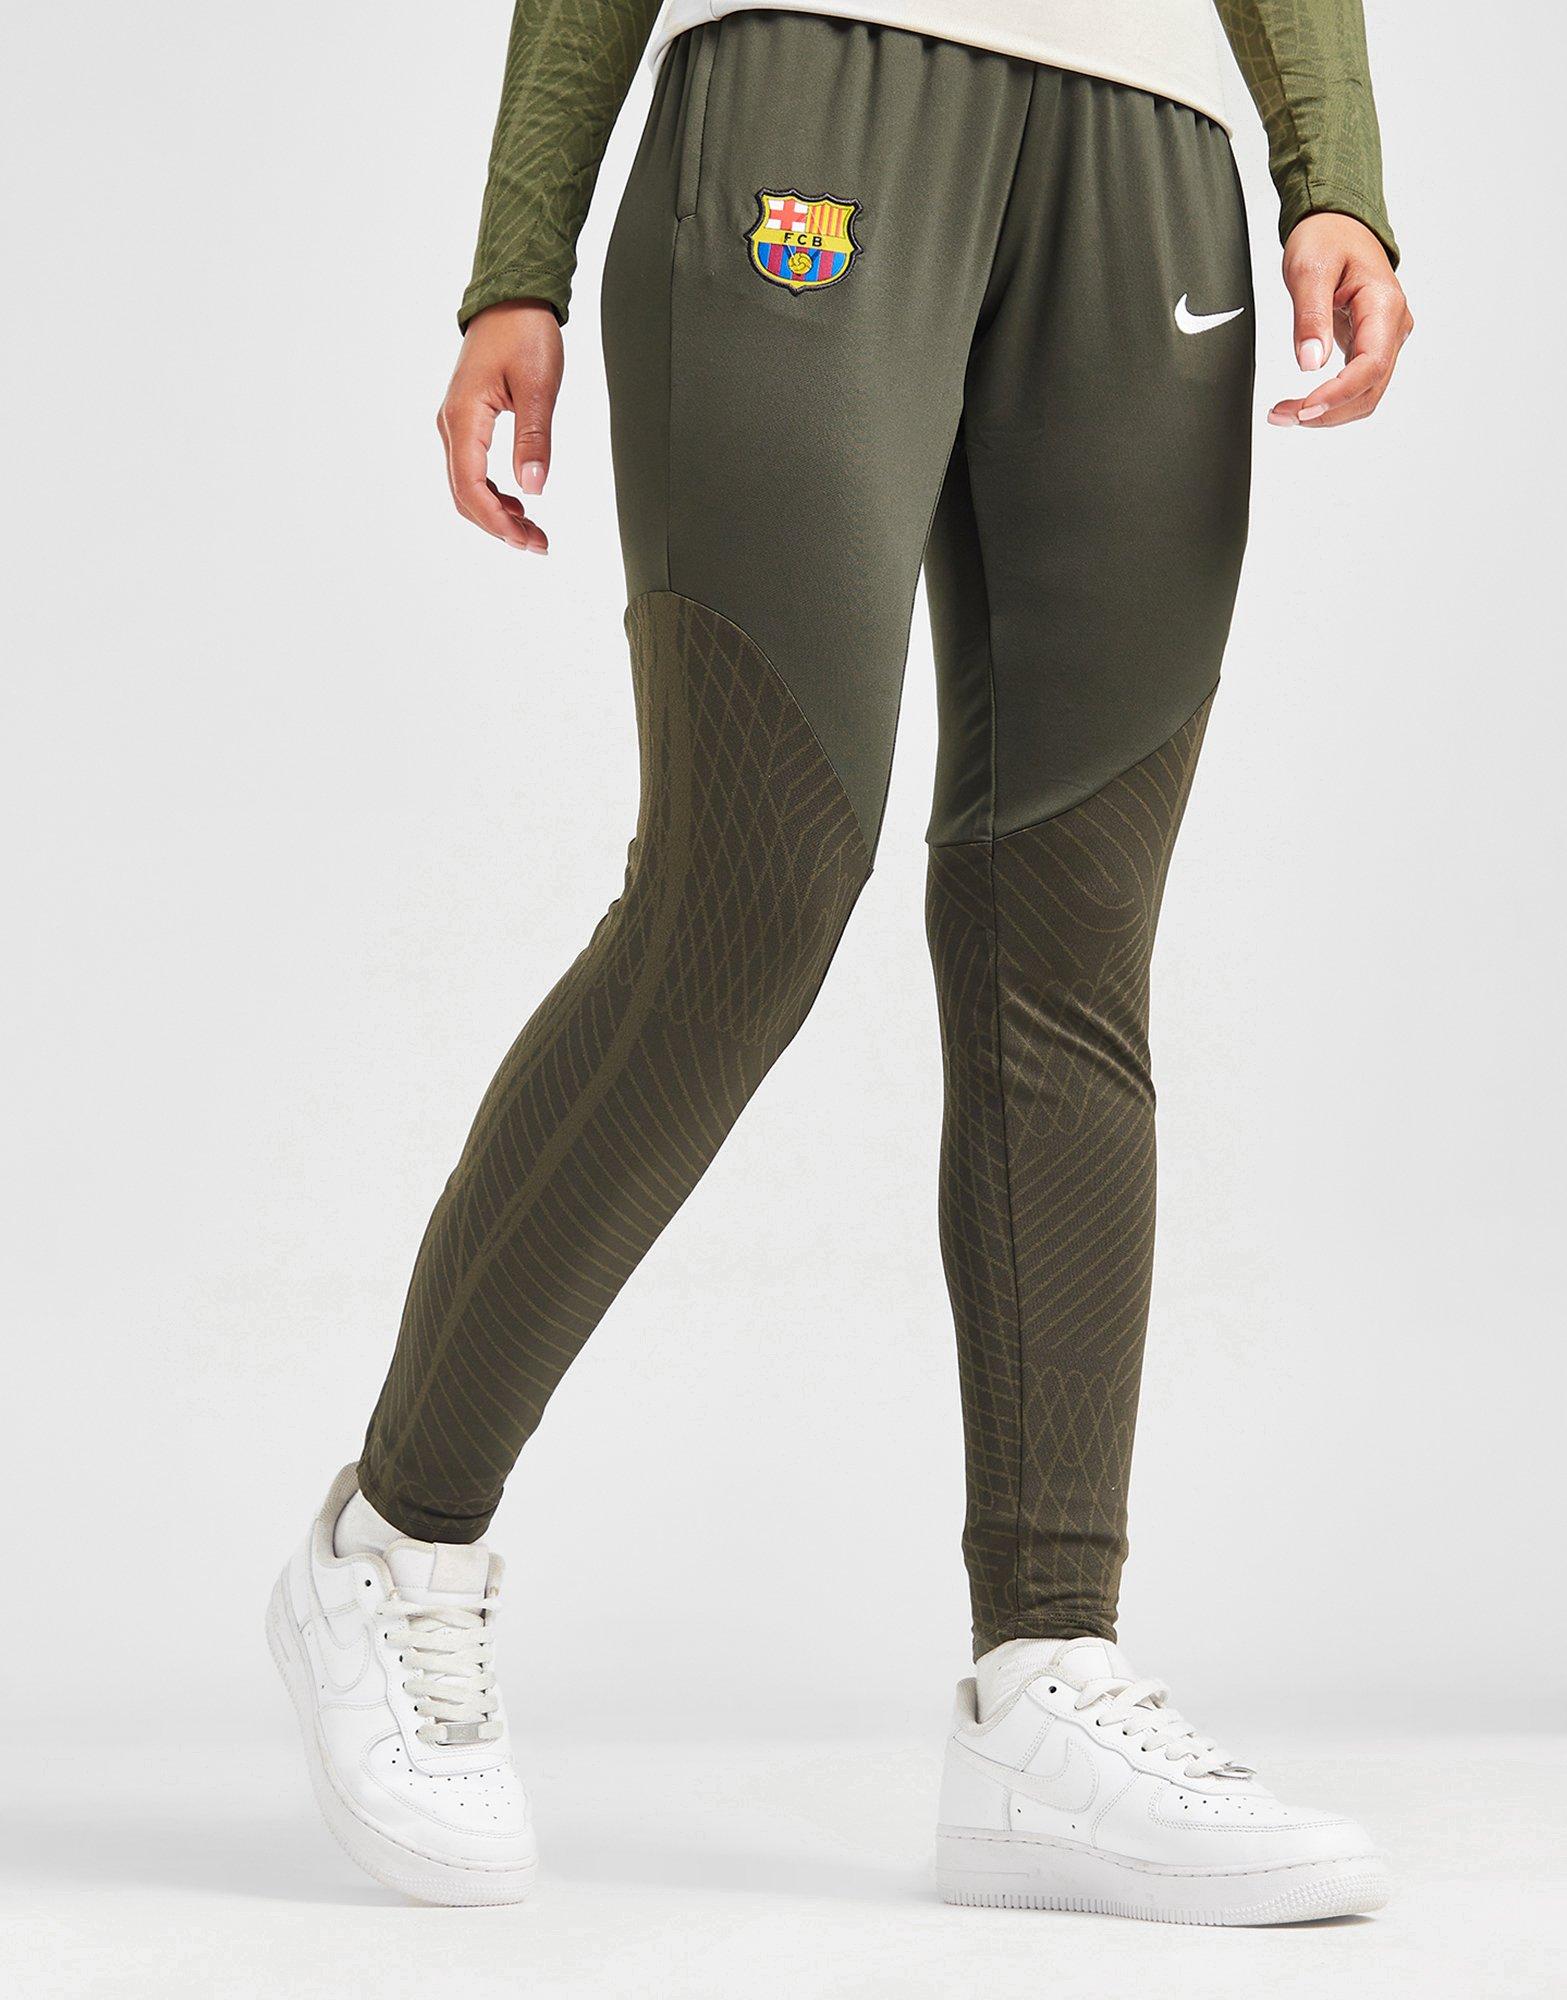 Nike Dri Fit Flat Zip Front Athletic Pants Womens (XL) (16-18